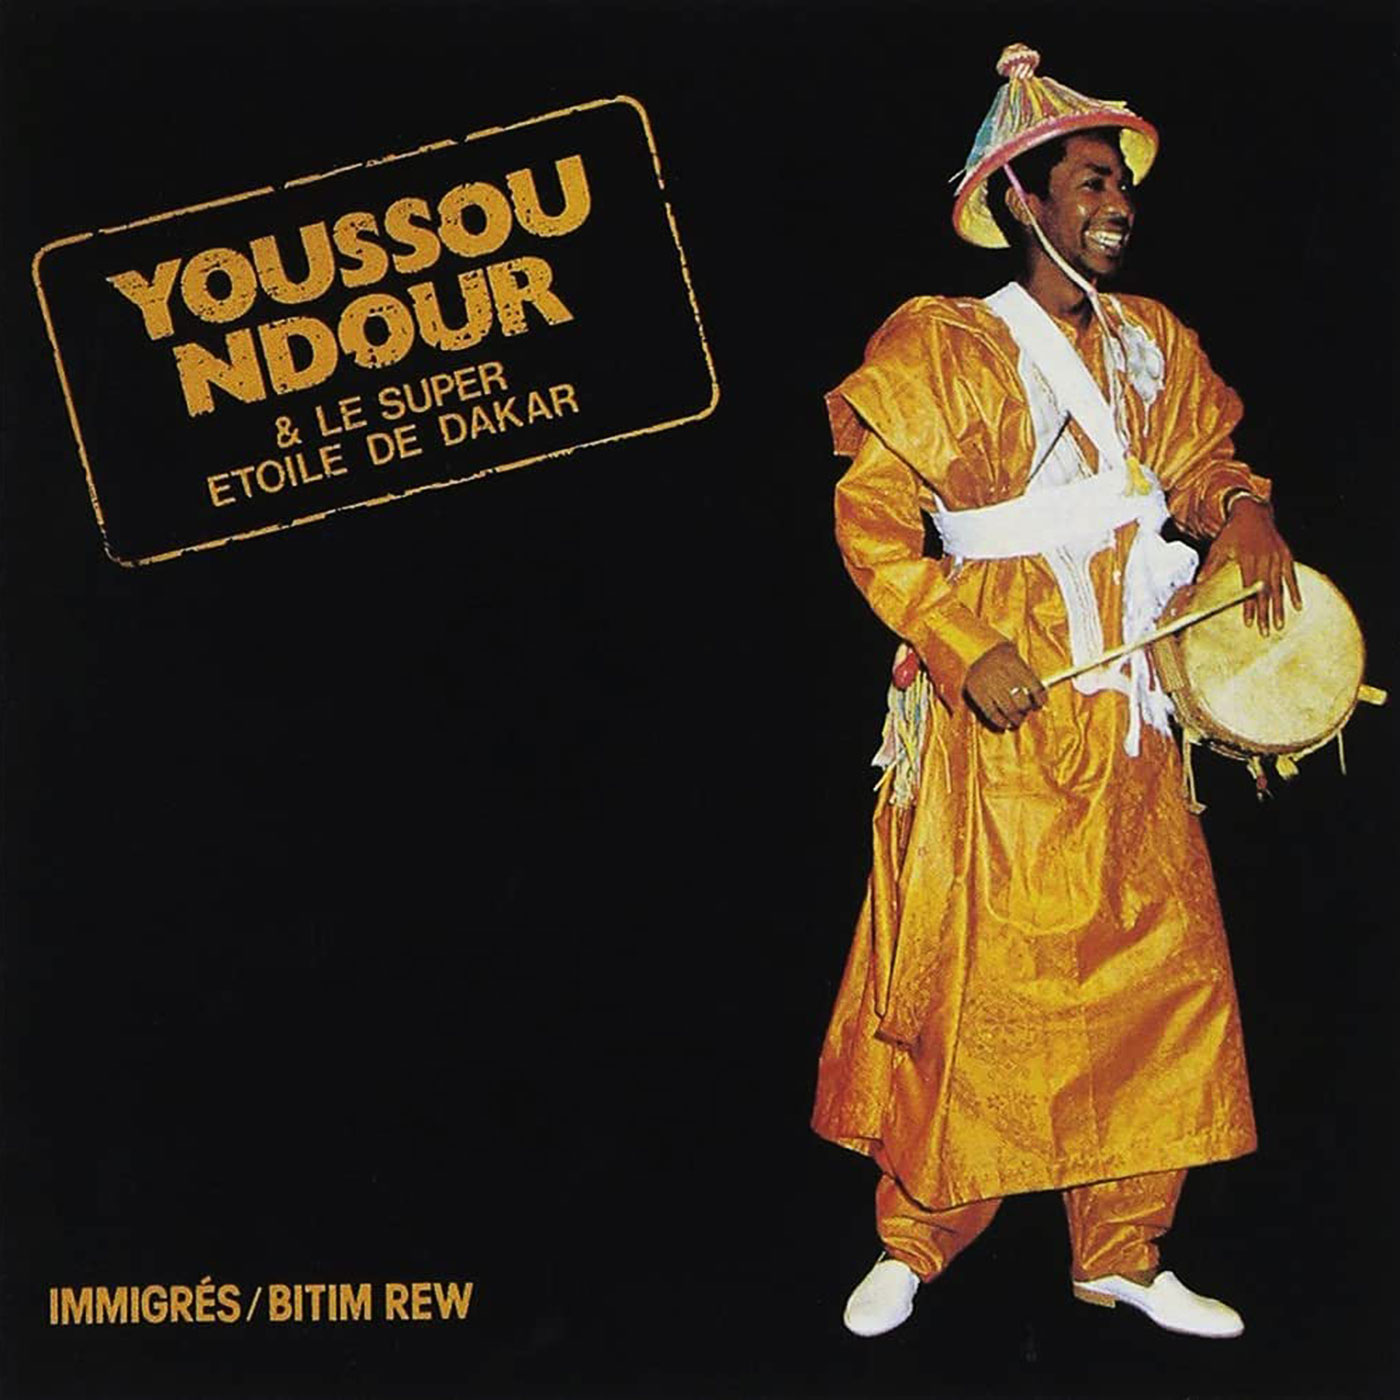 545 Youssou N’dour – Immigres